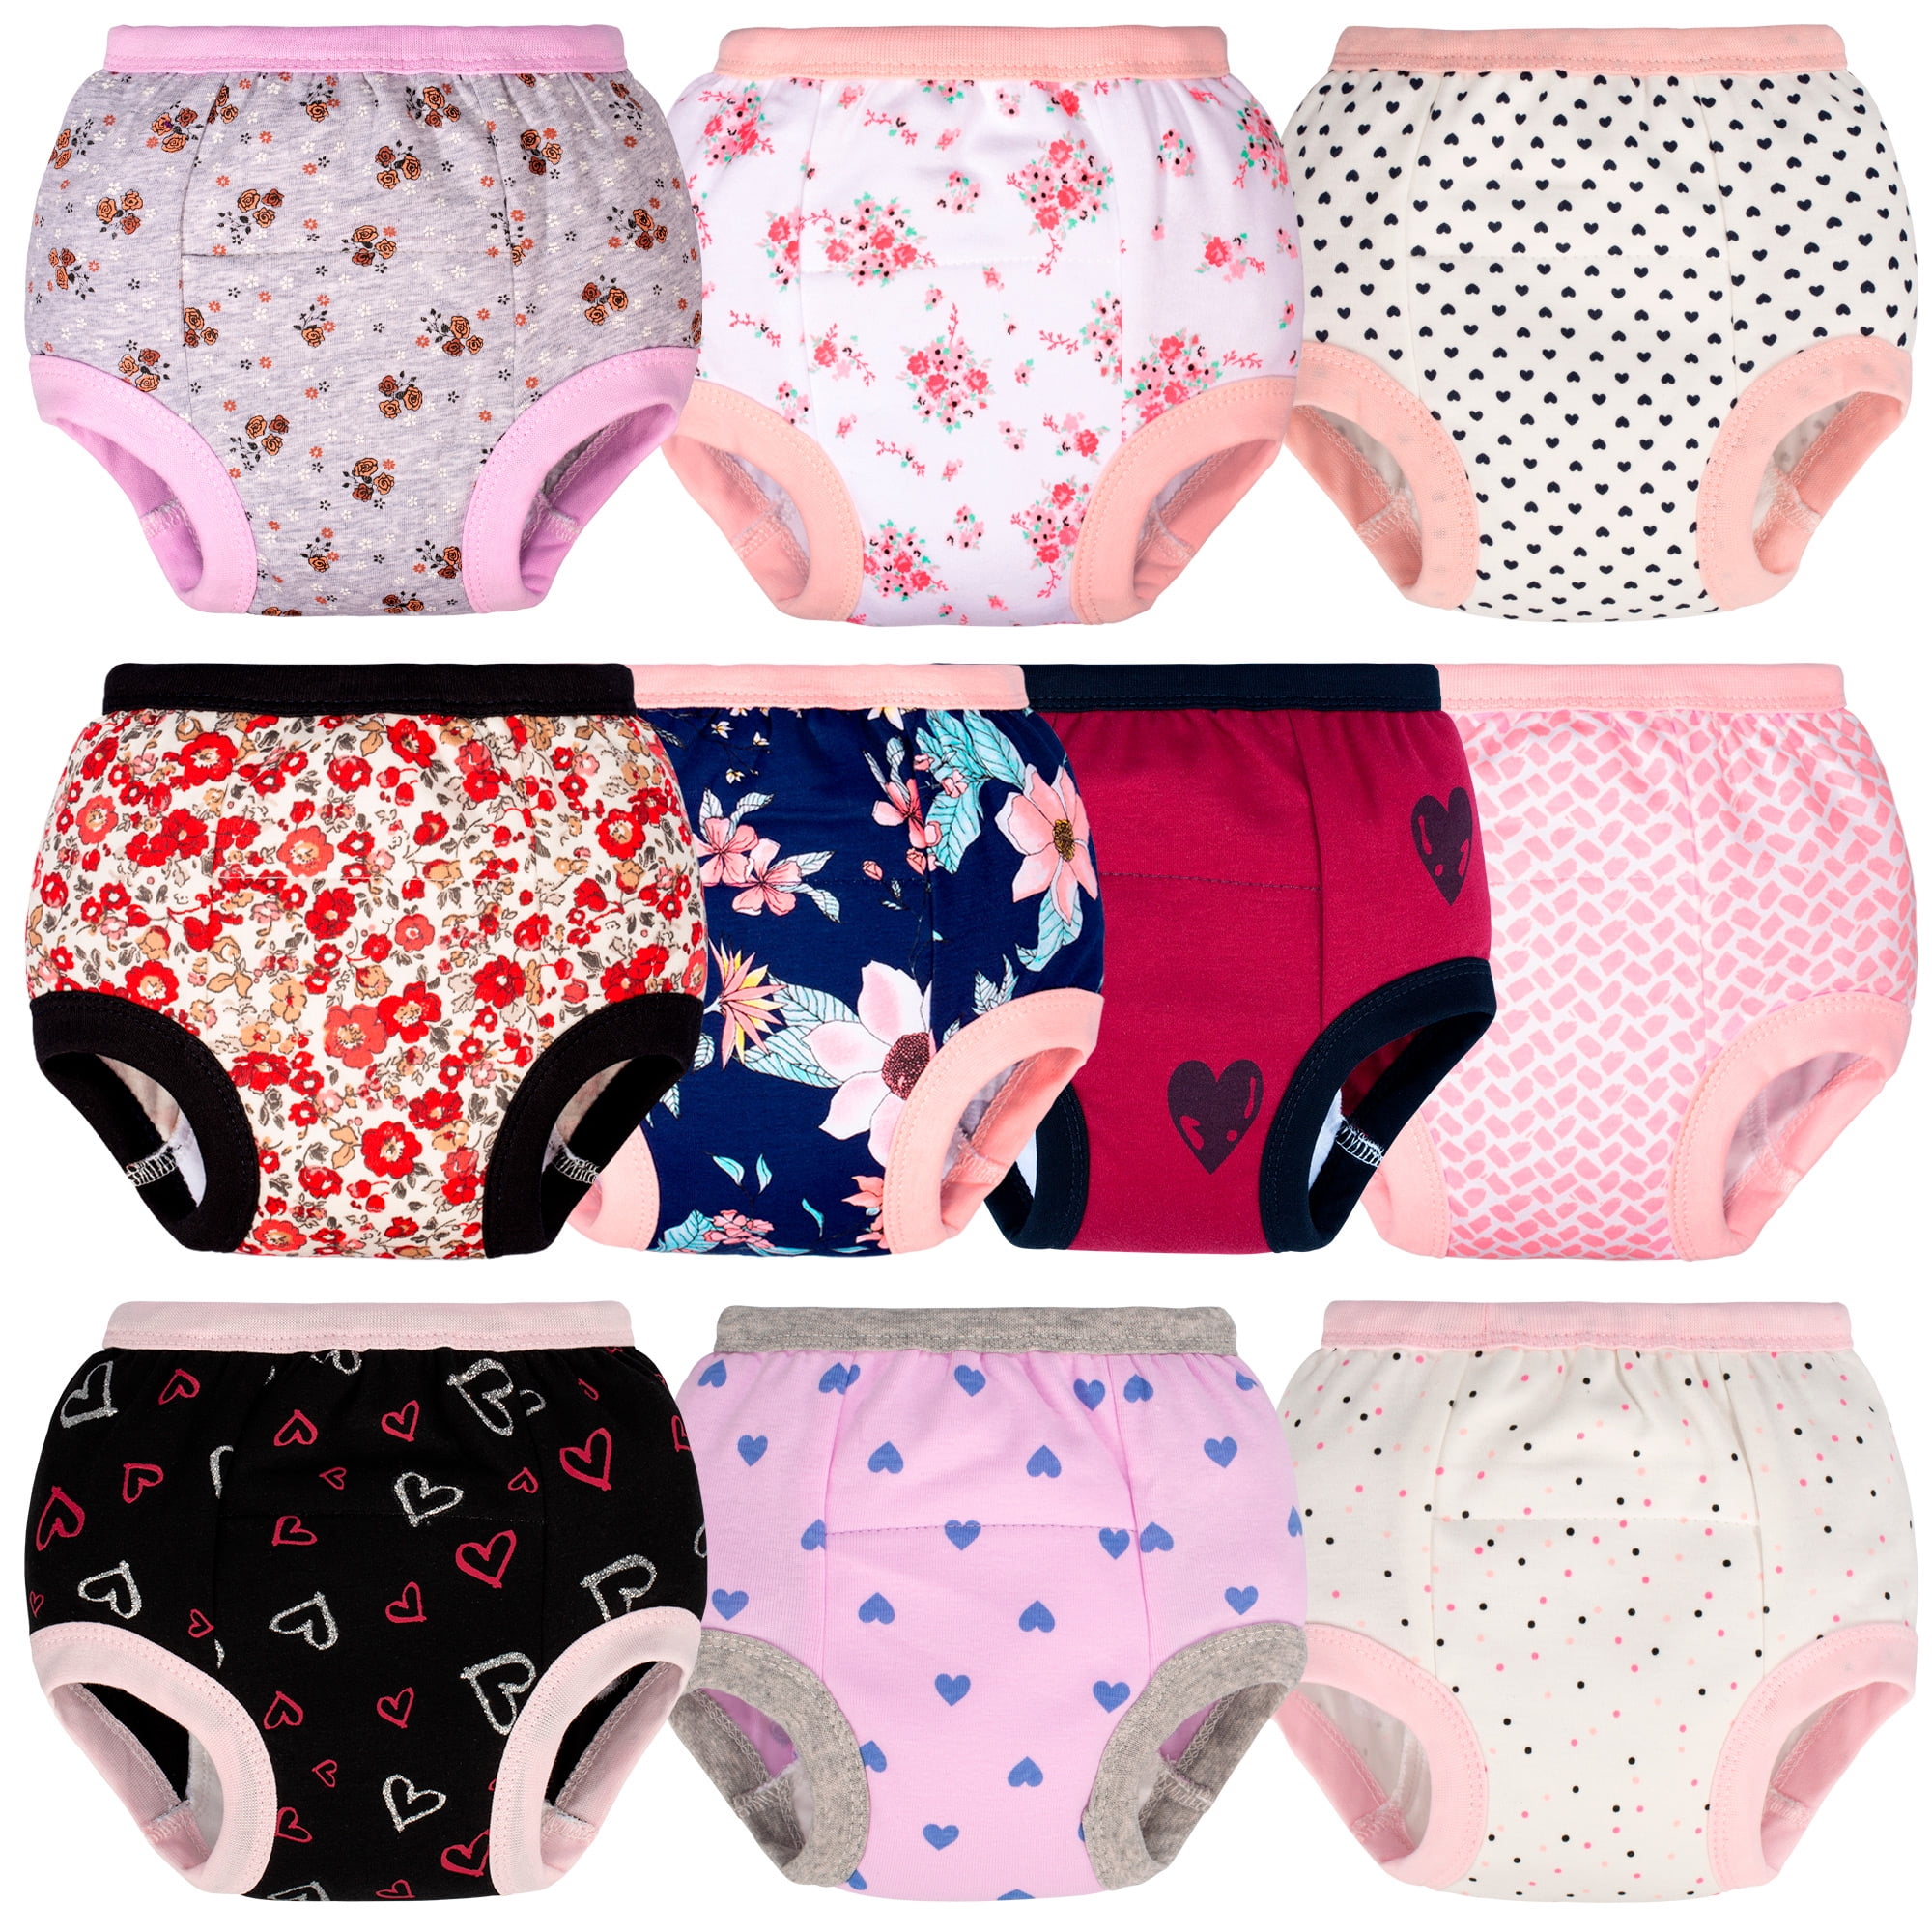  Toddler Girls Training Pants 4 Pack,Baby Girls Cotton Training  Underwear,Potty Training Underwear Girls MUL 3T